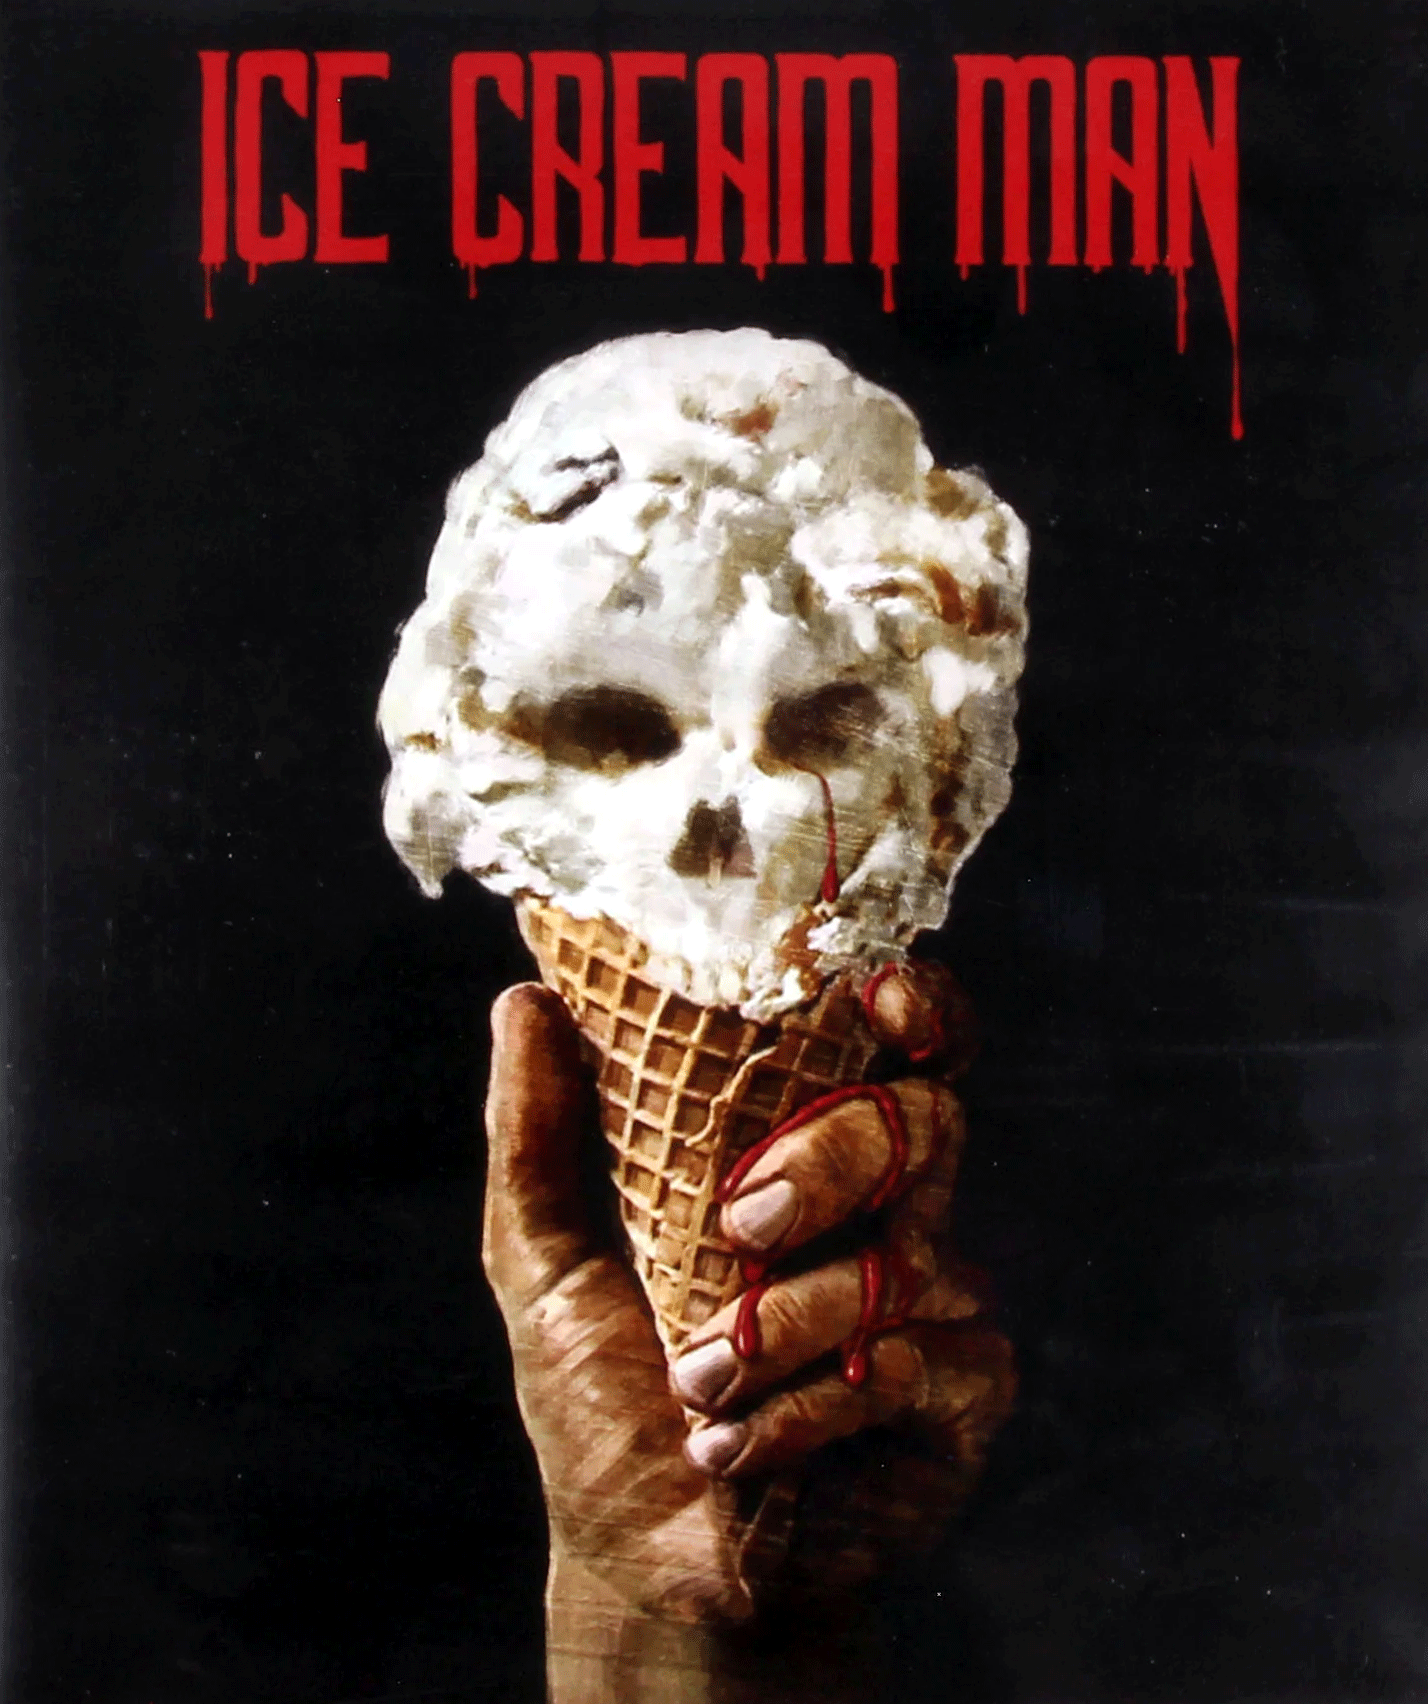 ICE CREAM MAN - BLU-RAY / DVD